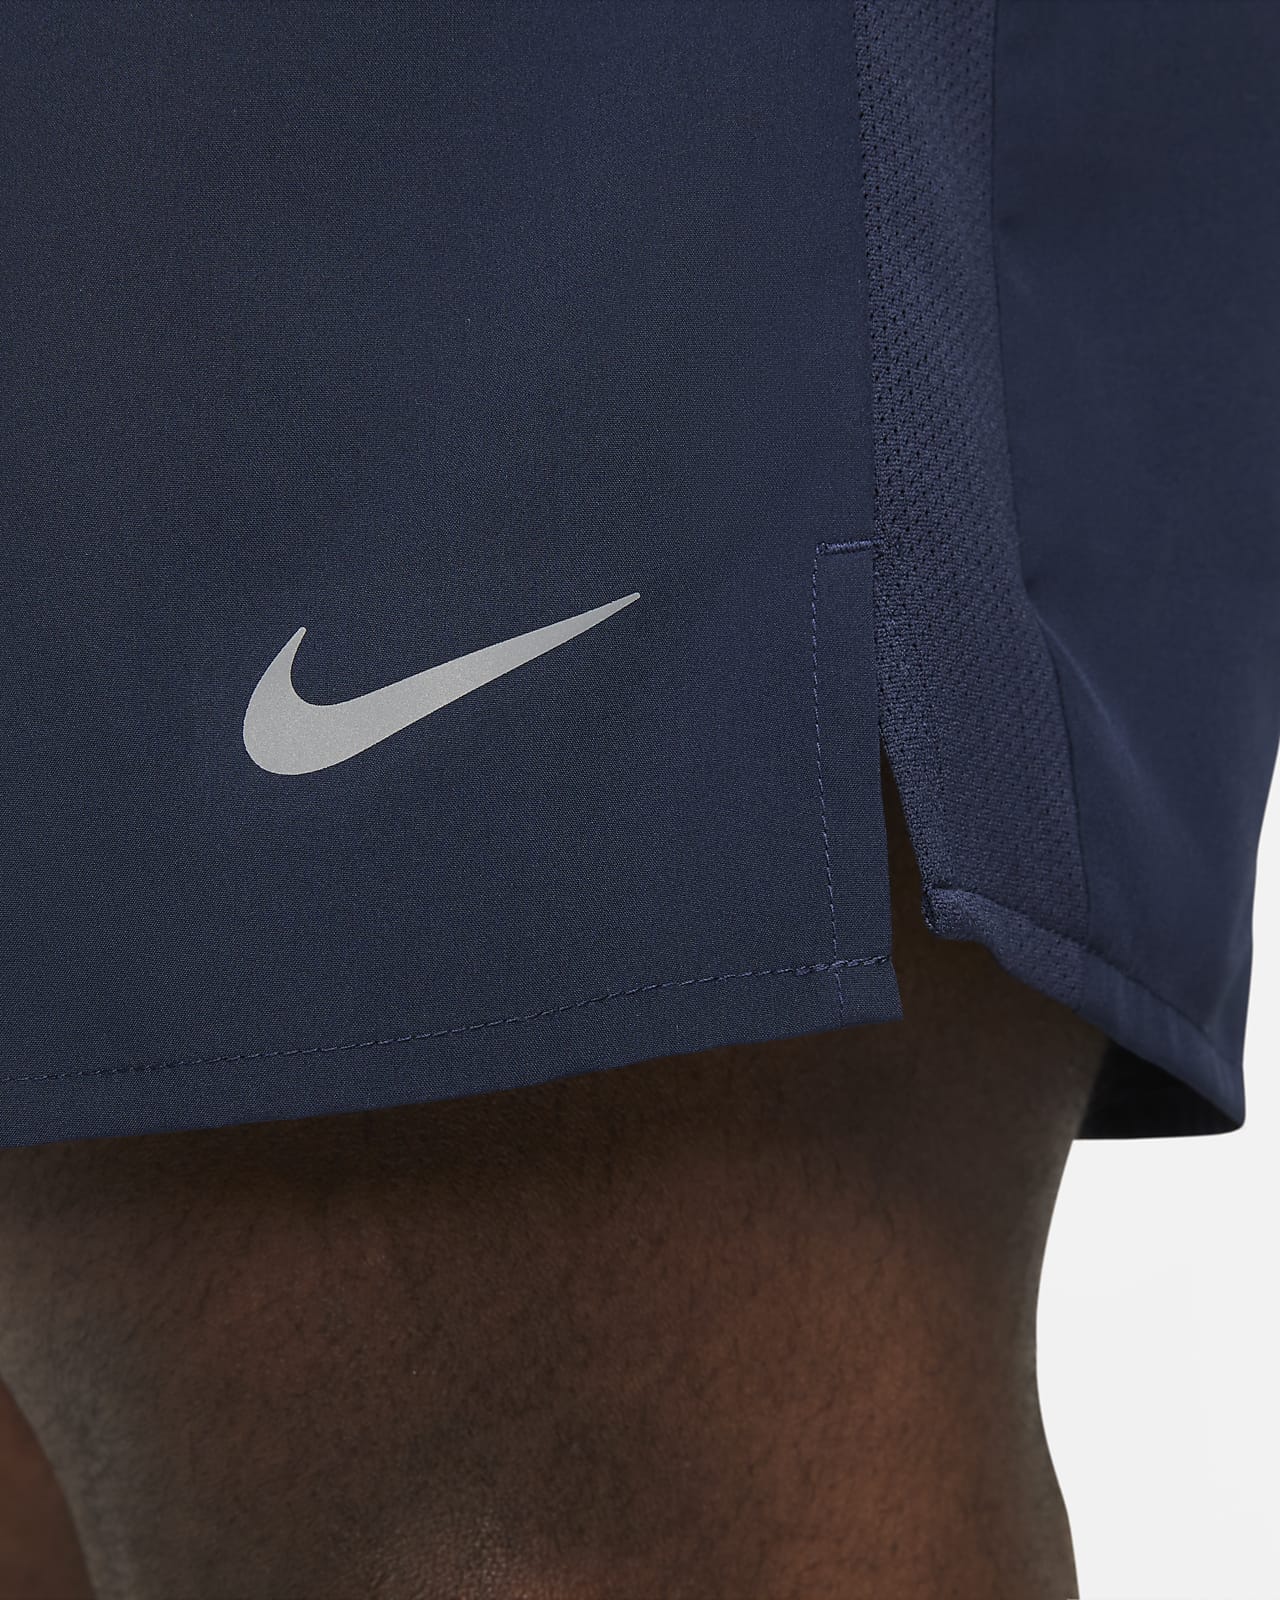 Nike Challenger Men's Dri-FIT 7" Unlined Running Shorts.